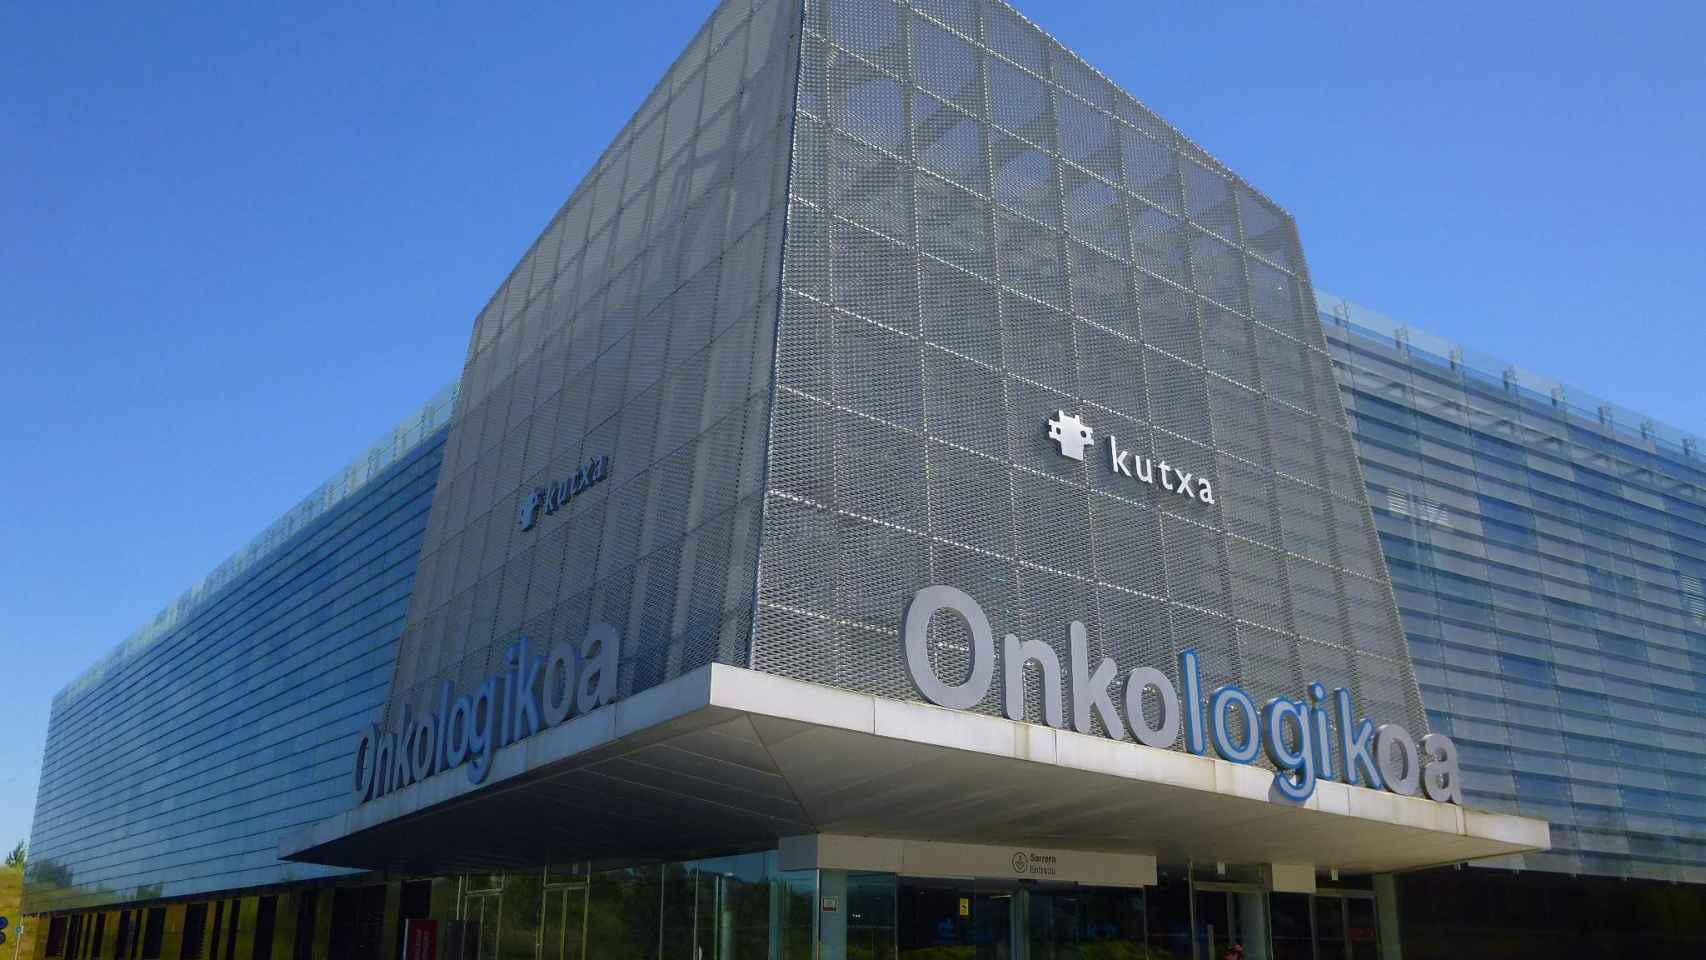 El Onkologikoa, en una imagen de archivo / Wikipedia Commons